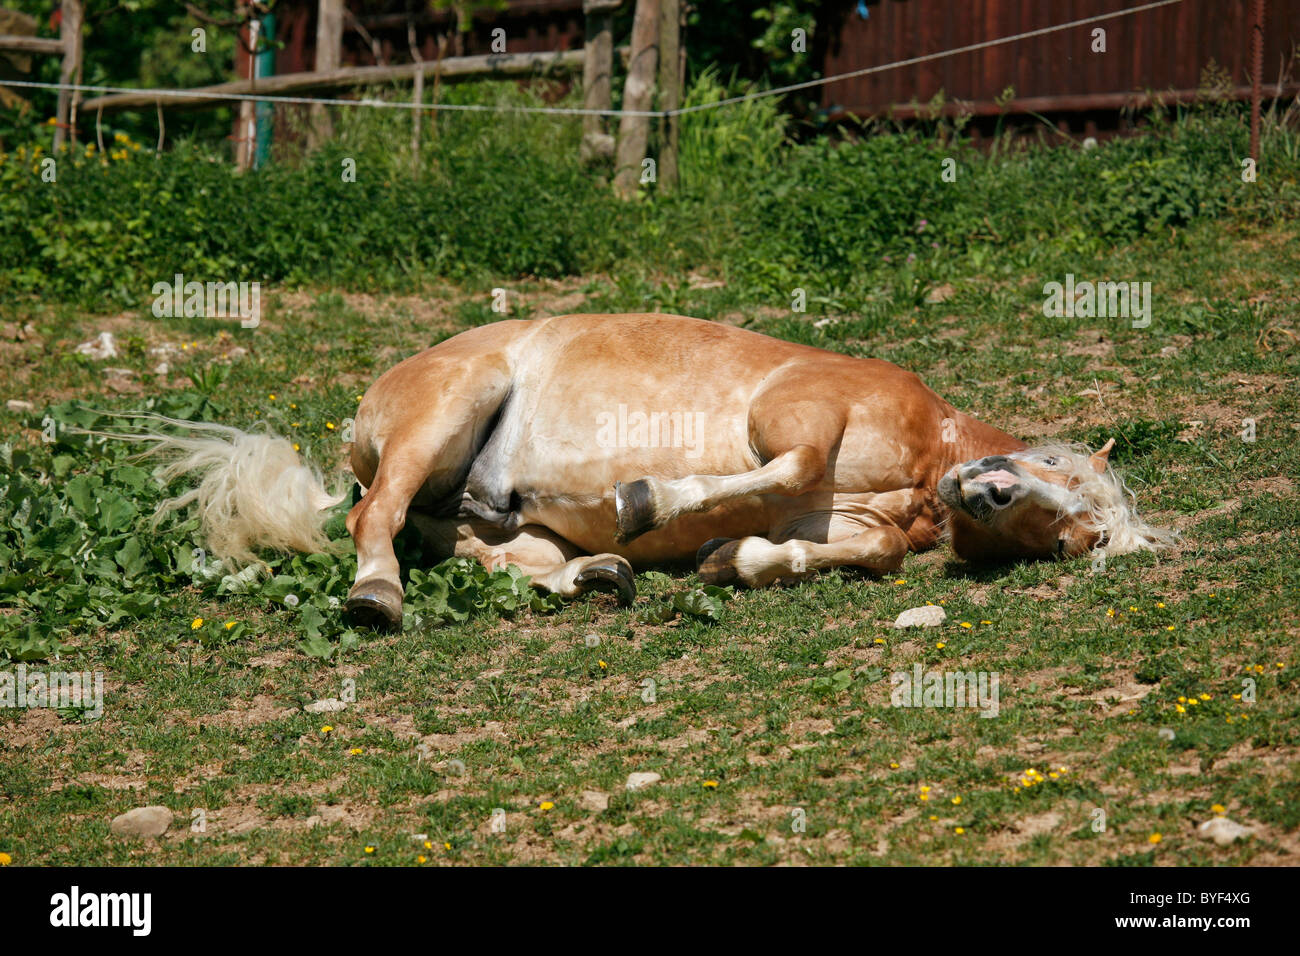 sich wälzender Haflinger / wallowing horse Stock Photo